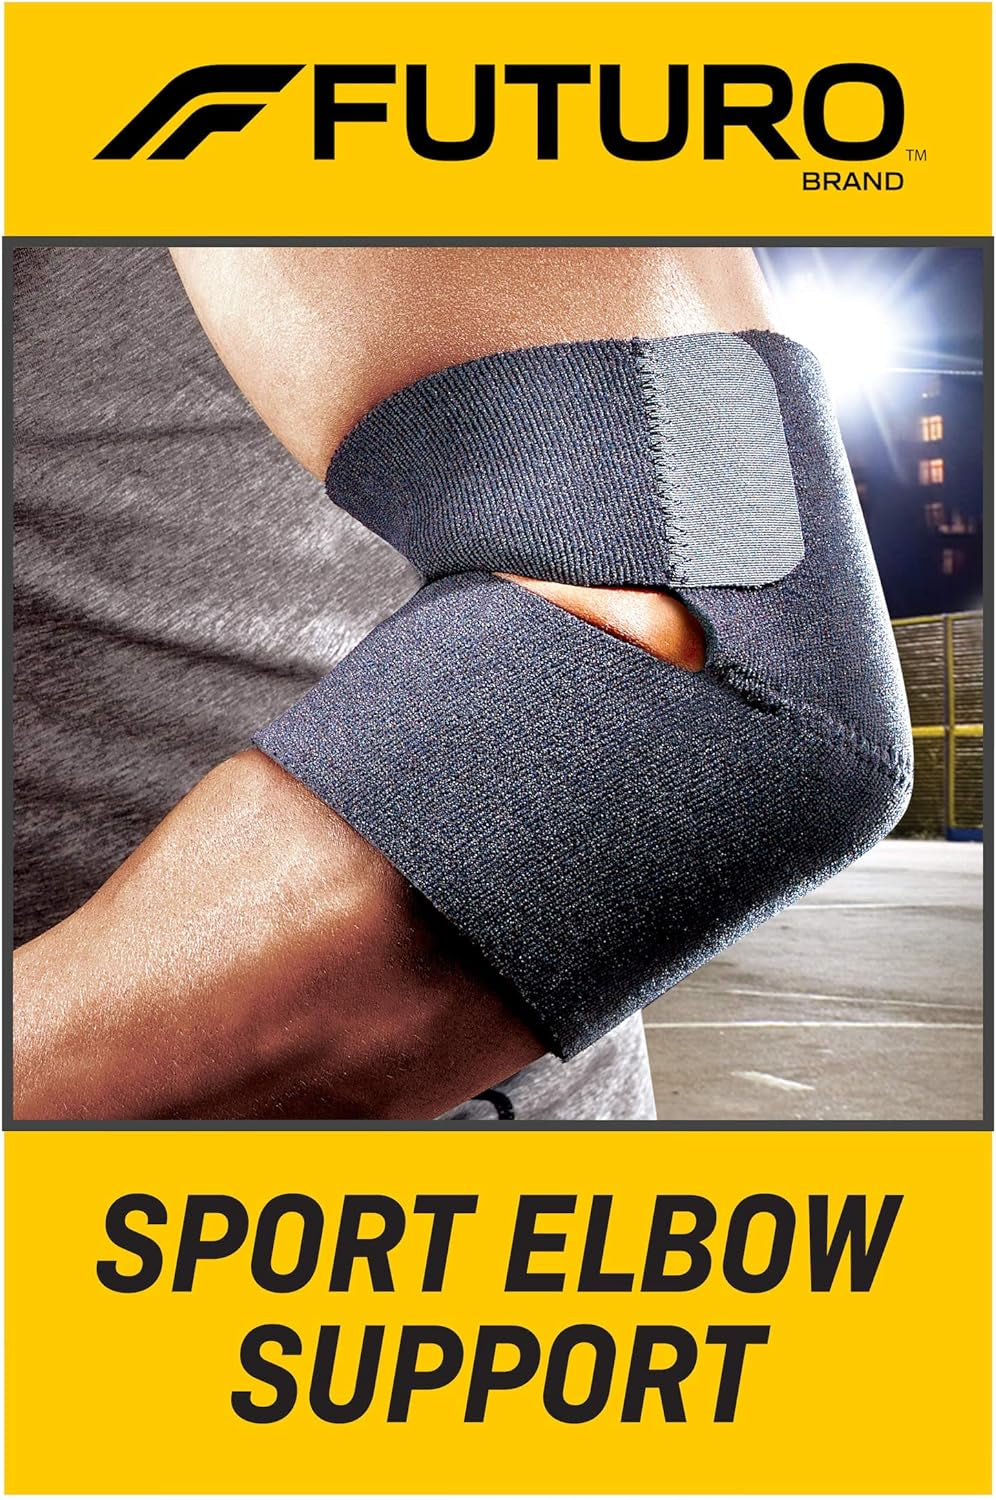 Futuro Sport Adjustable Elbow Support 09038EN, Adjustable (Pack of 2)